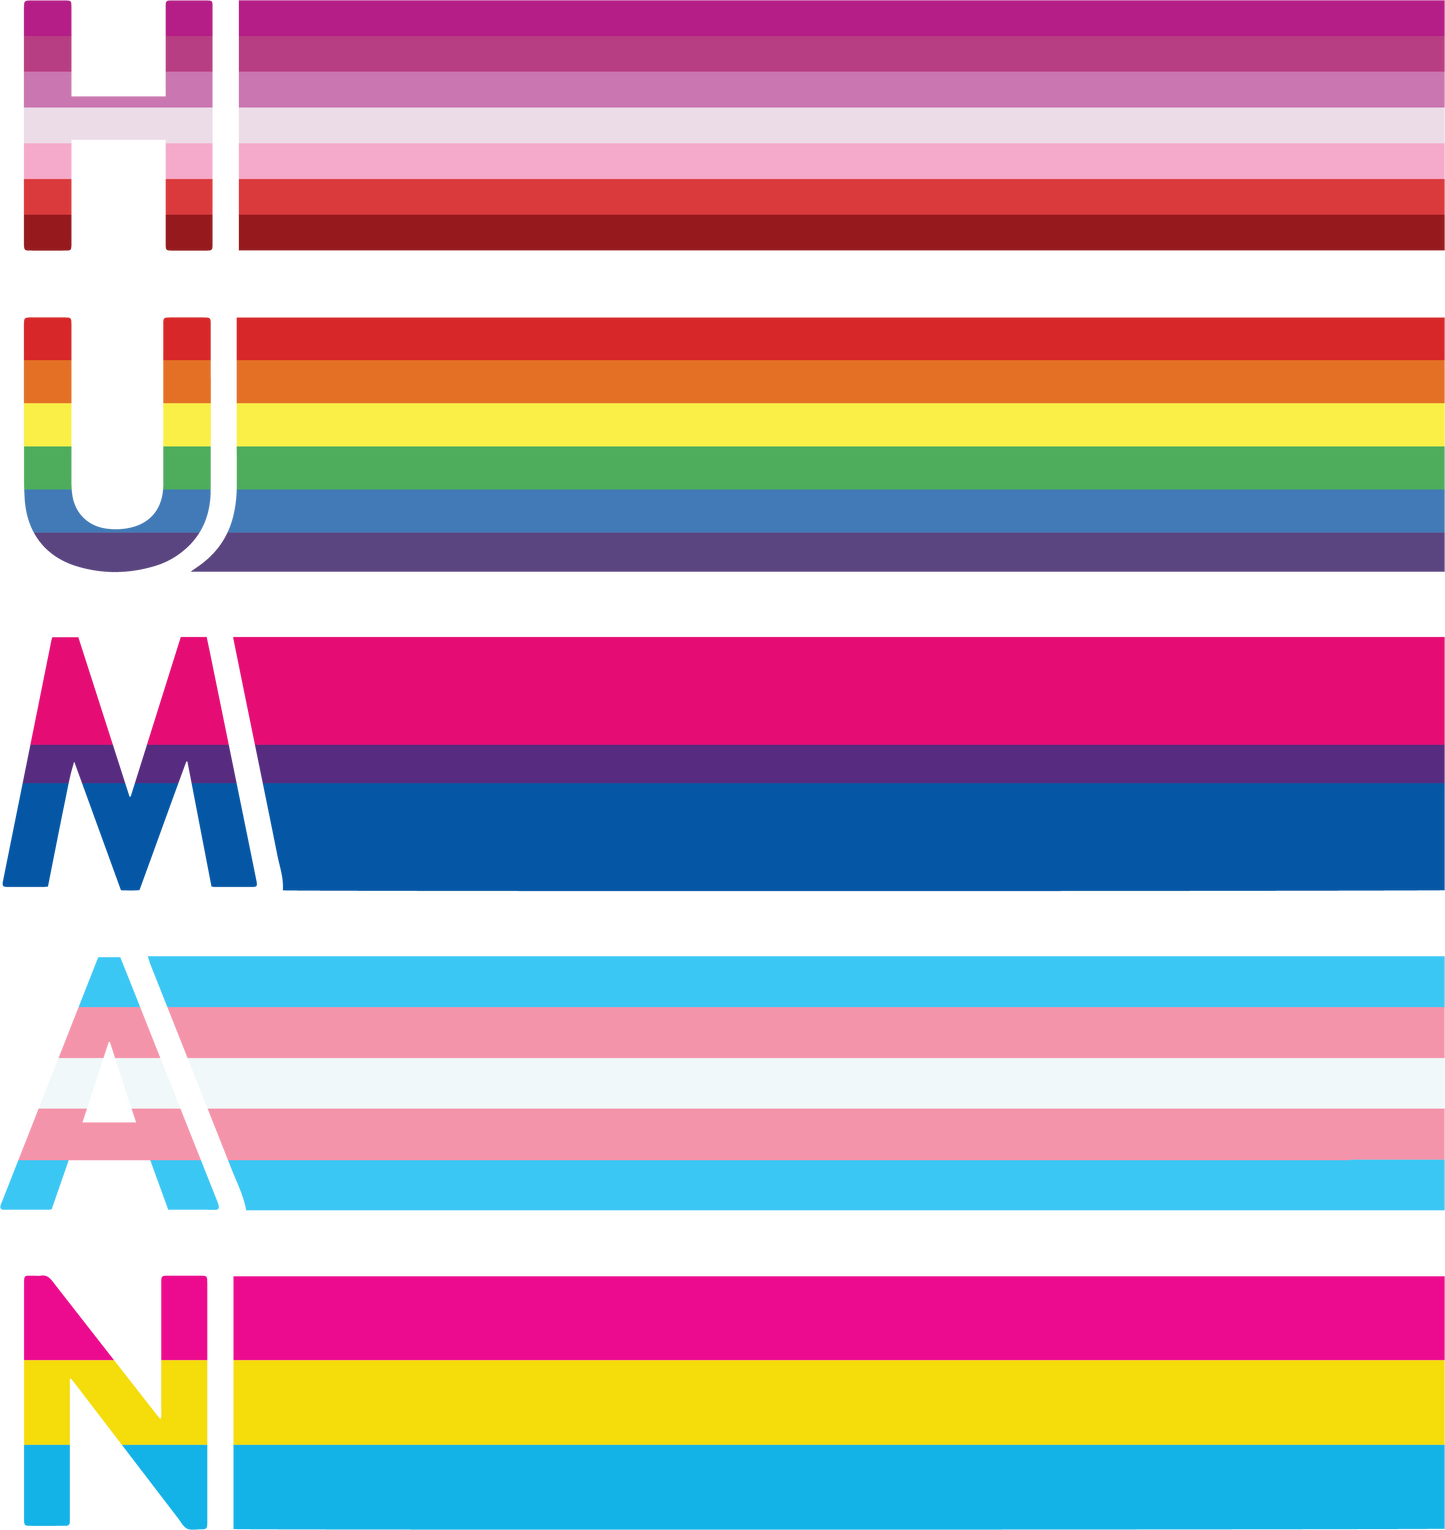 LGBTQ Human Rainbow Hoodie